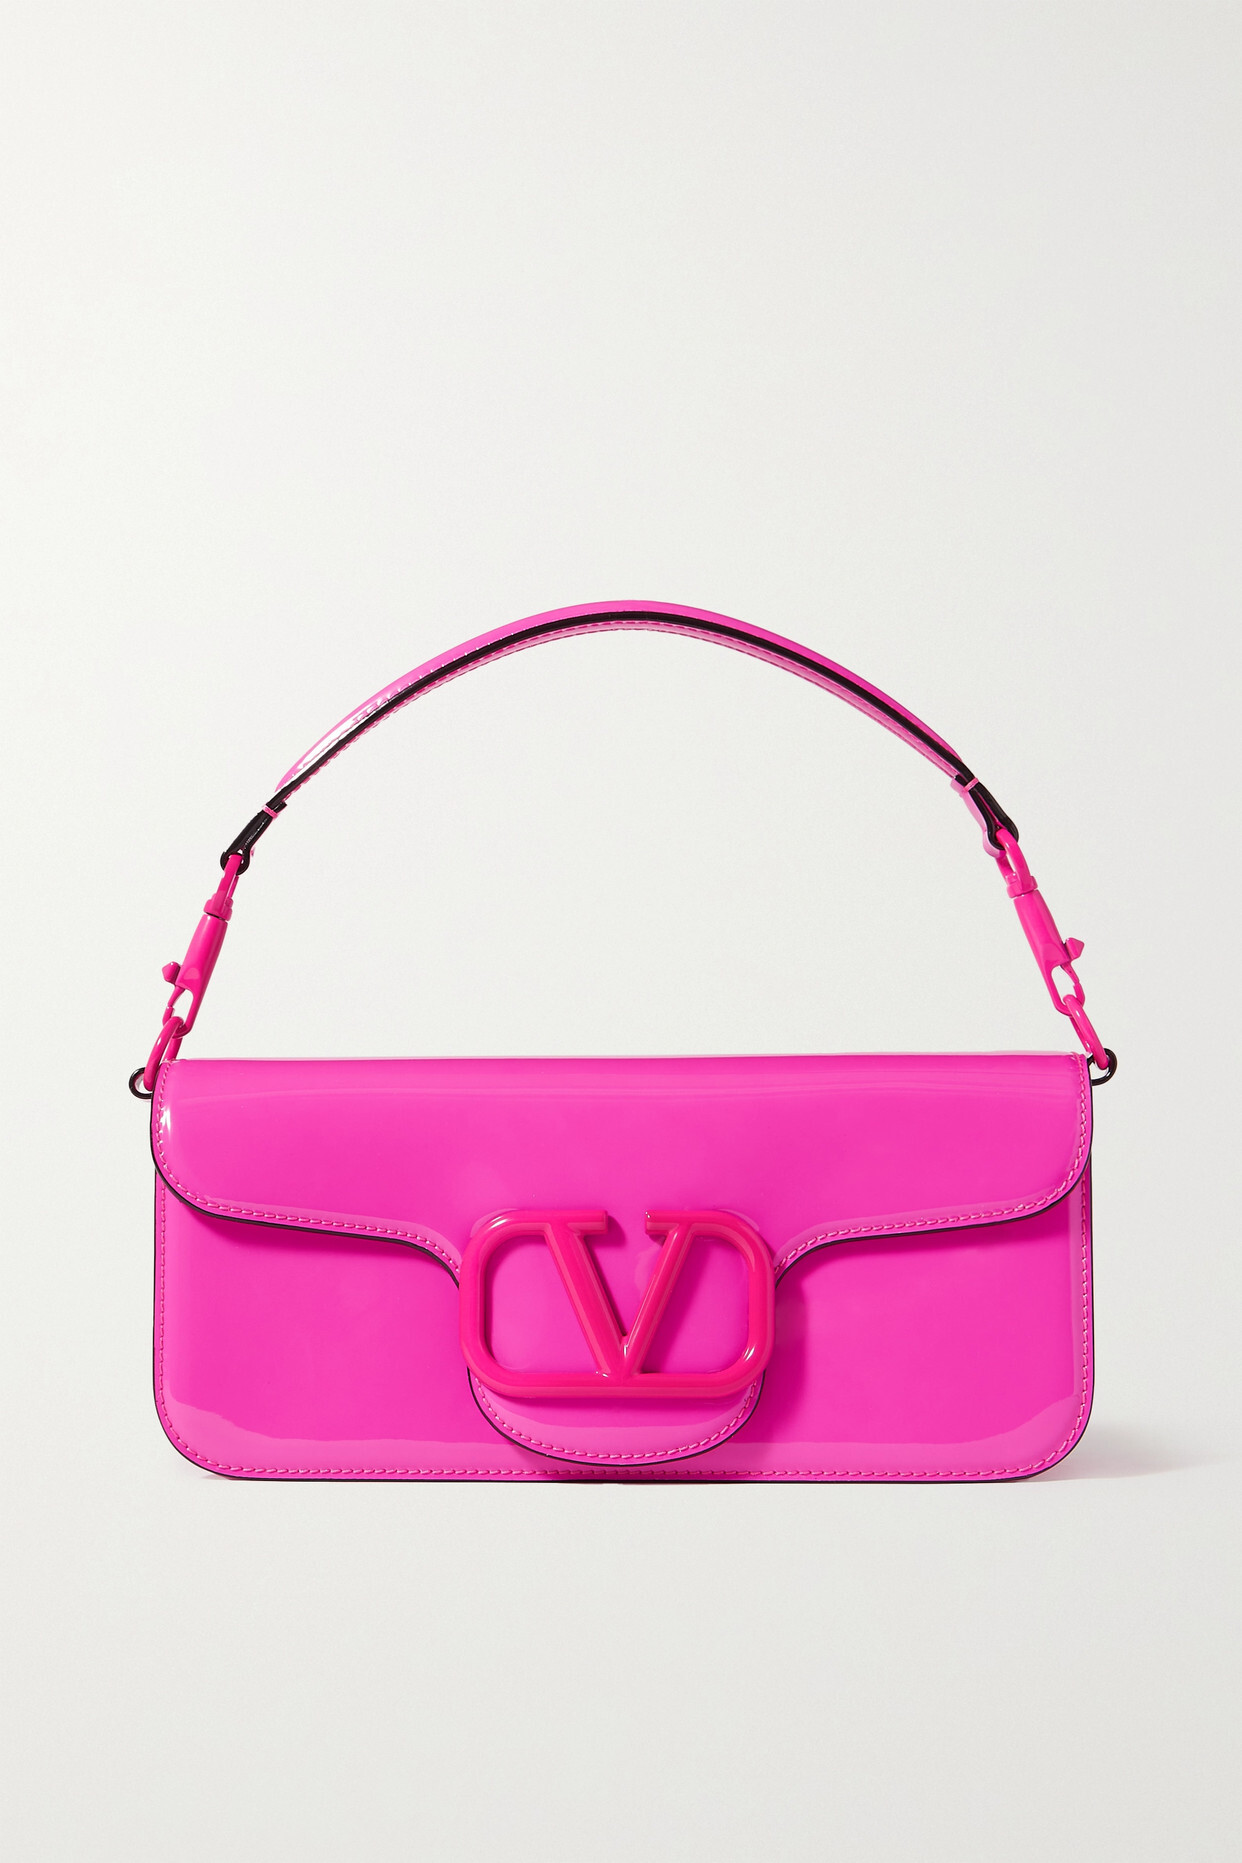 Valentino - Valentino Garavani Vlogo Patent-leather Shoulder Bag - Pink